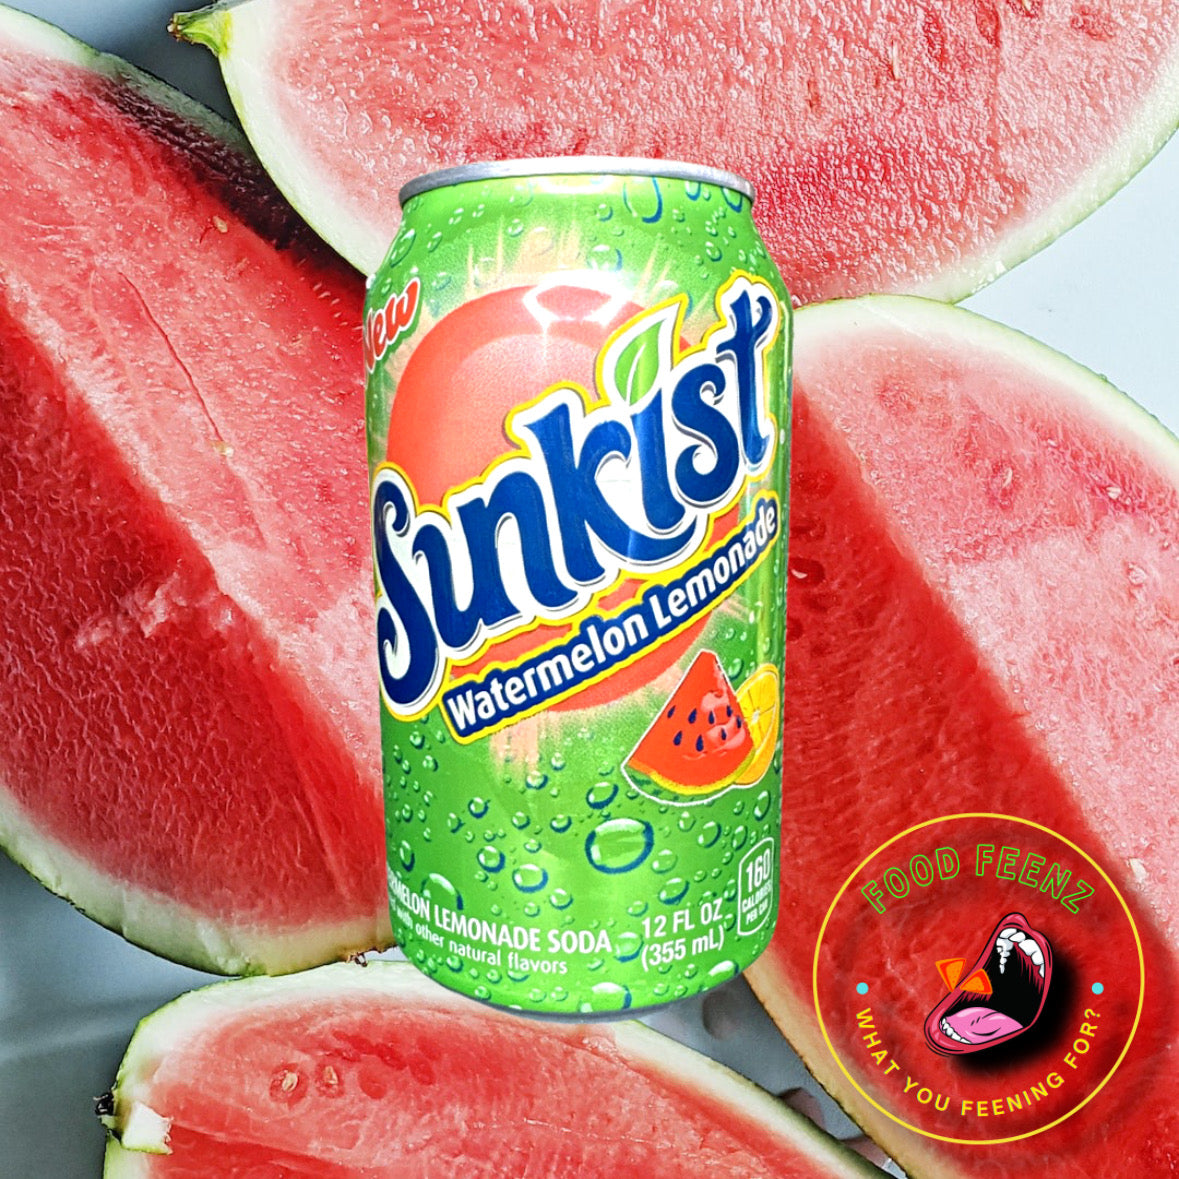 Sunkist Watermelon Lemonade Soda